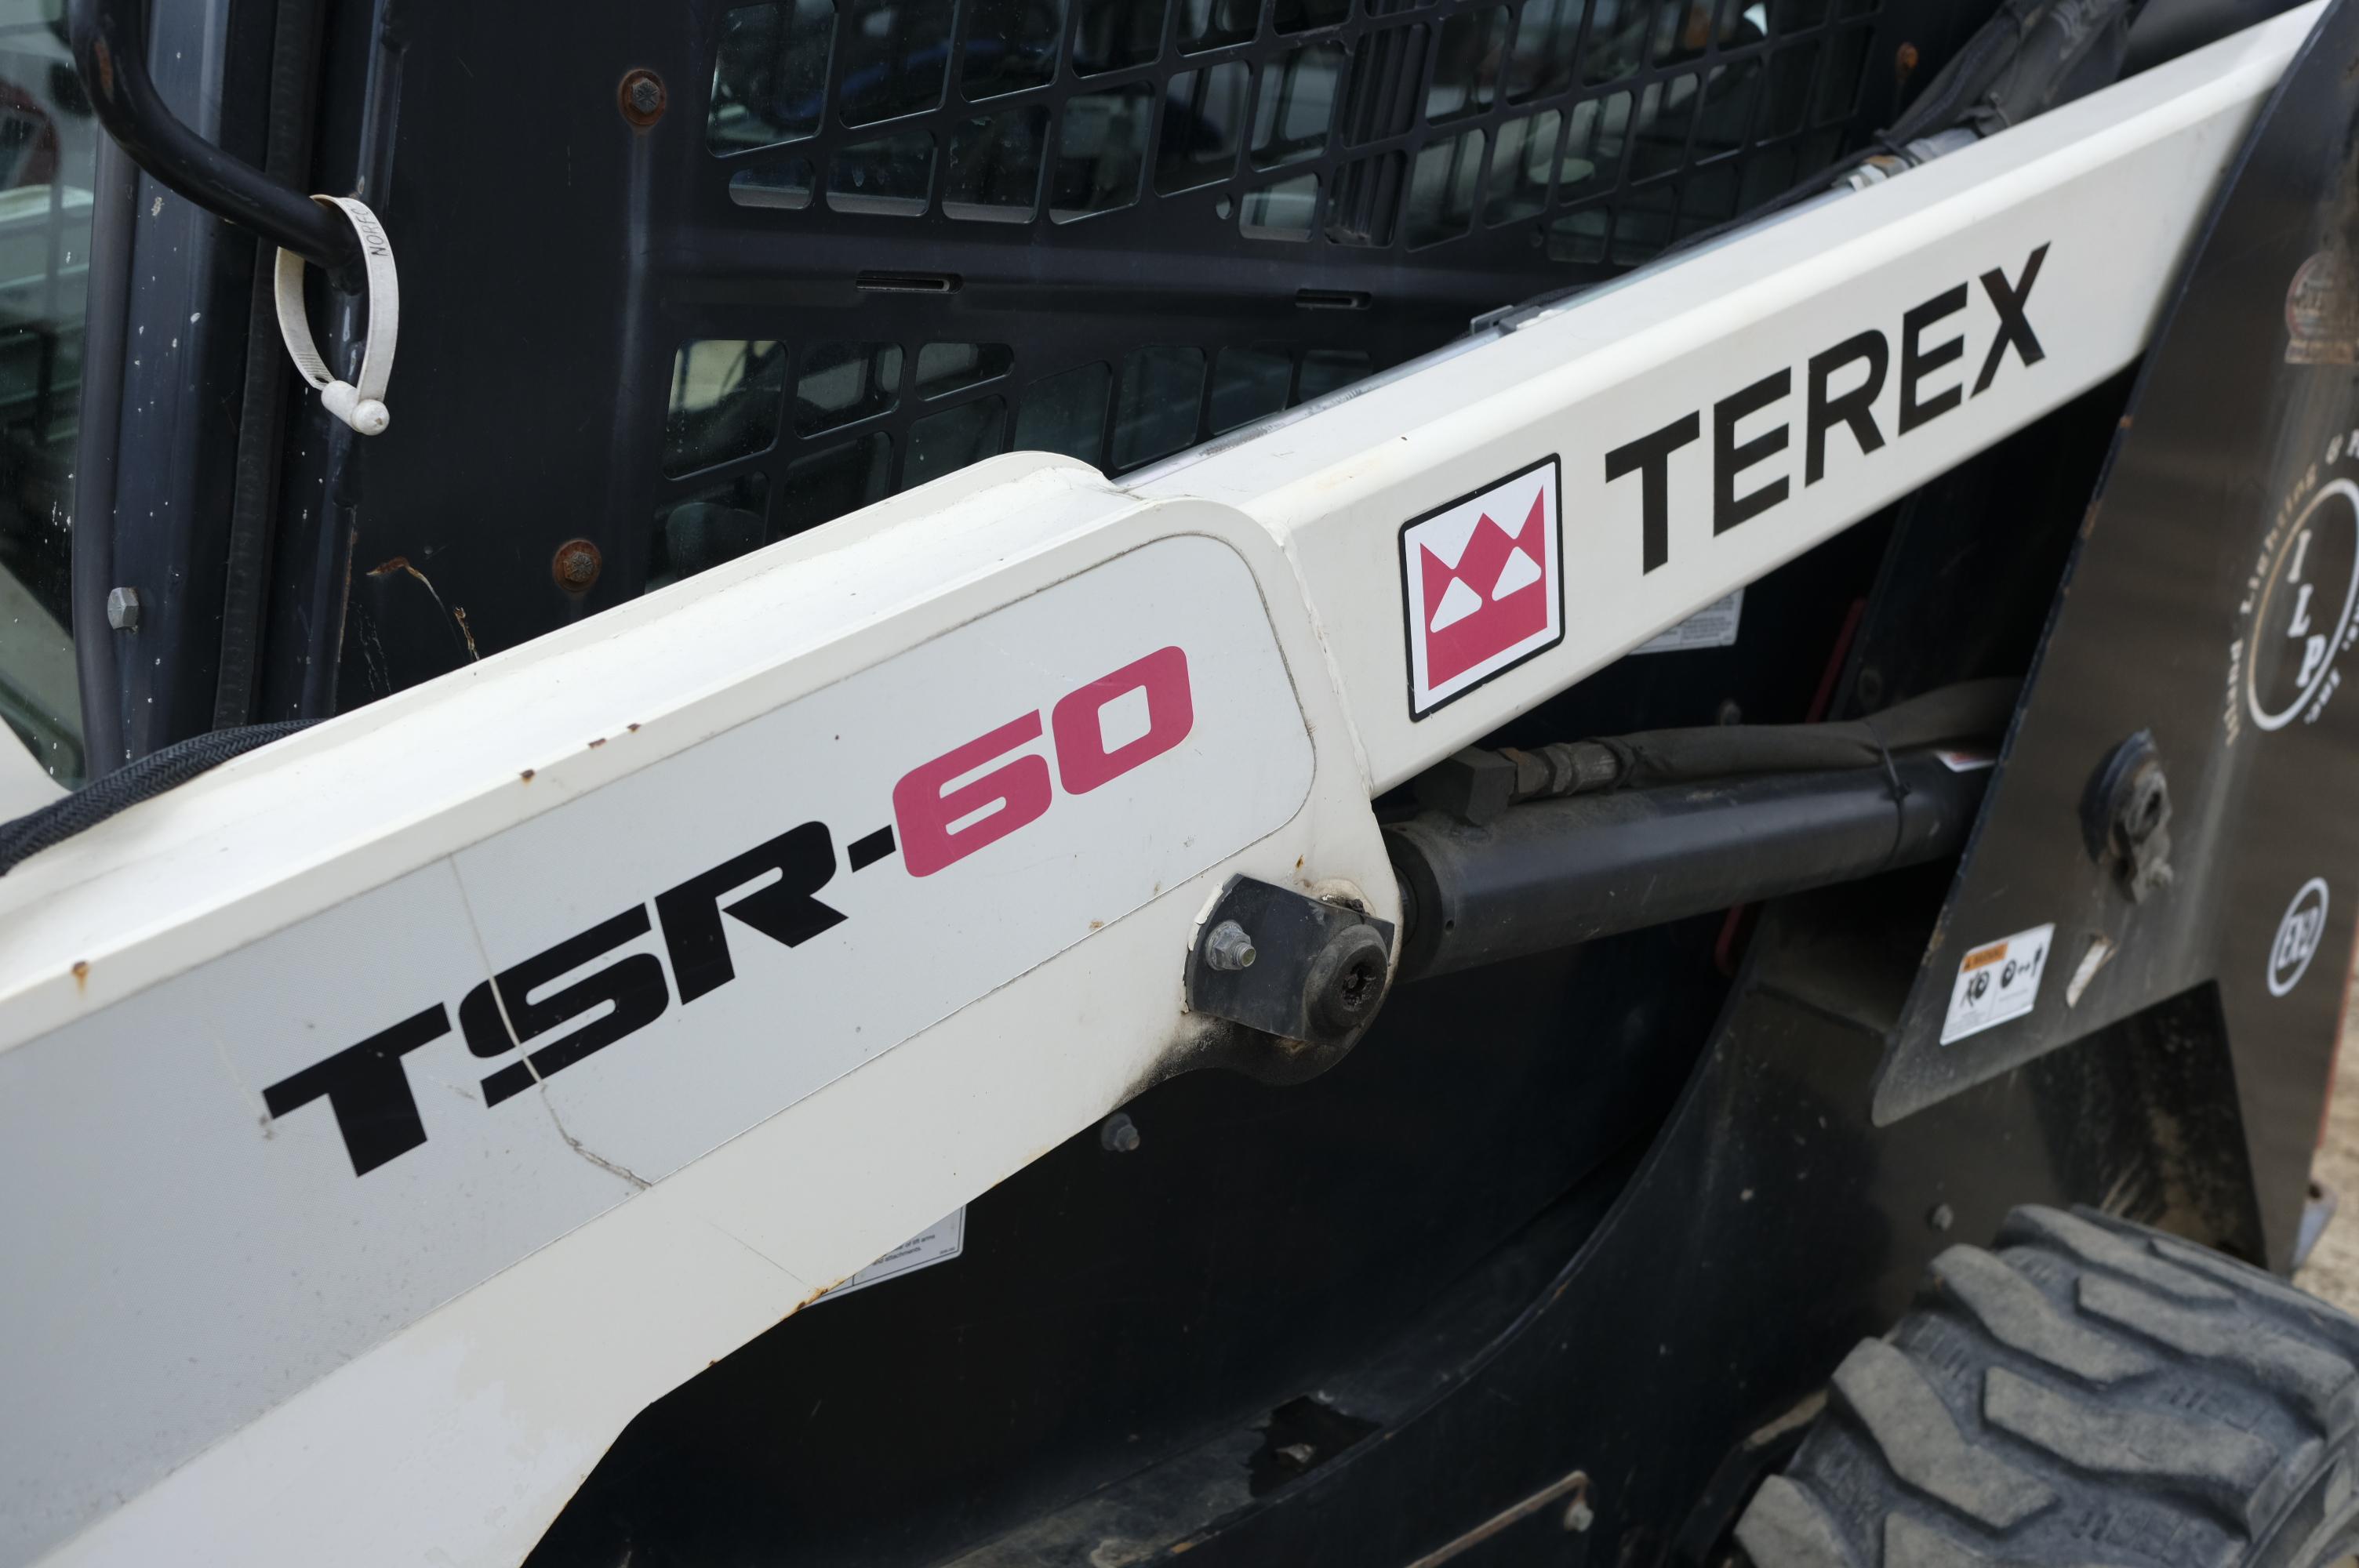 Terex TSR 60 skid steer